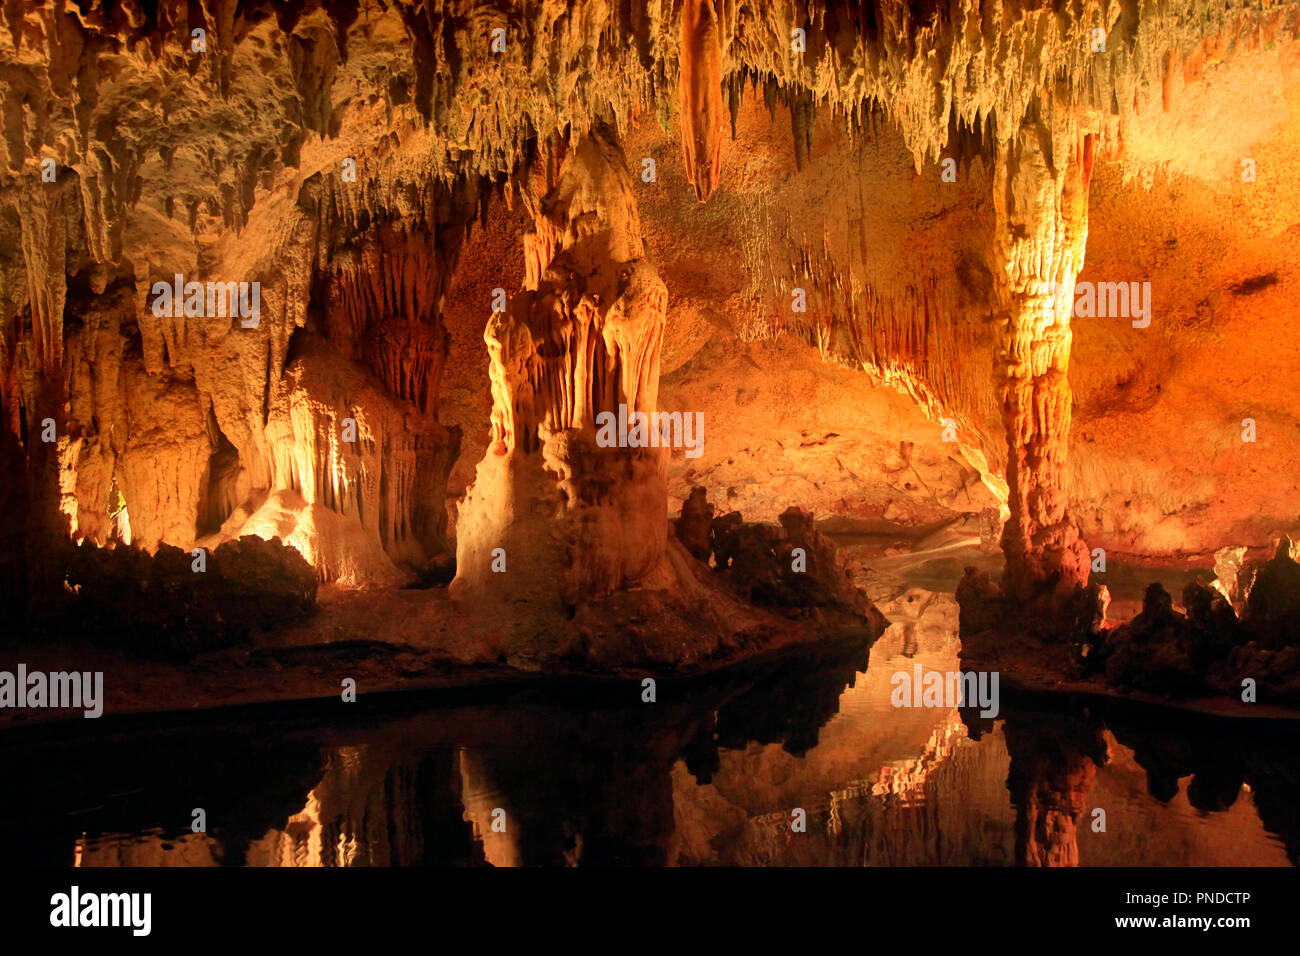 Cueva de las Maravillas. Cave of Wonders - one of the main natural attractions of the Dominican Republic Stock Photo